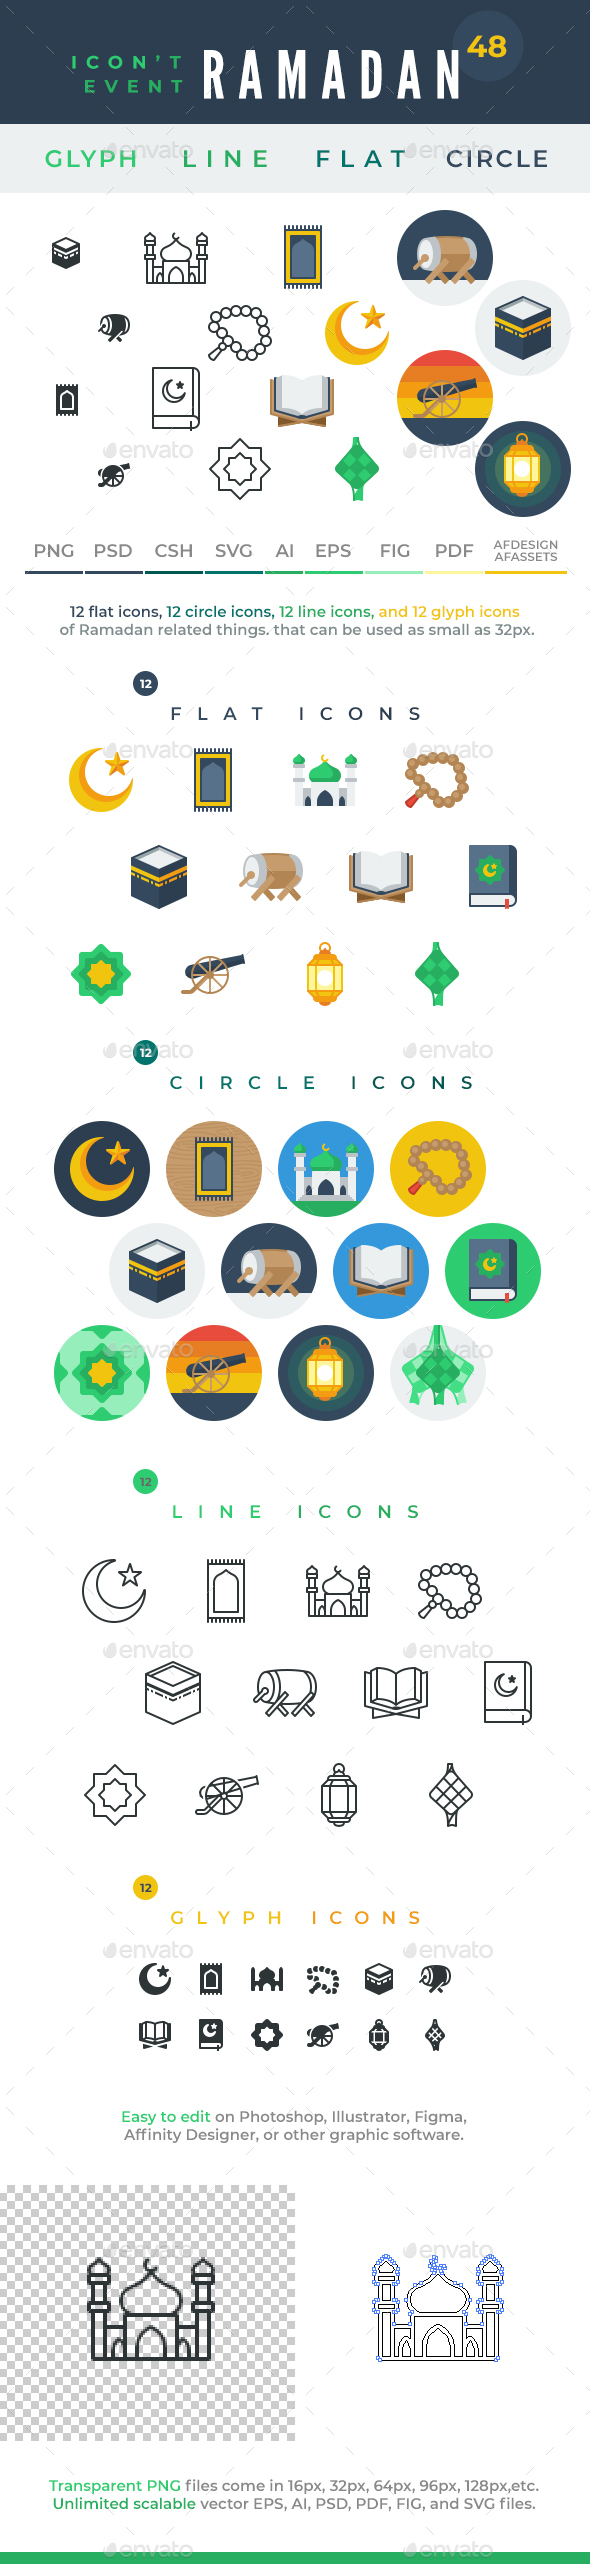 Icon't Event - 48 Ramadan Icons